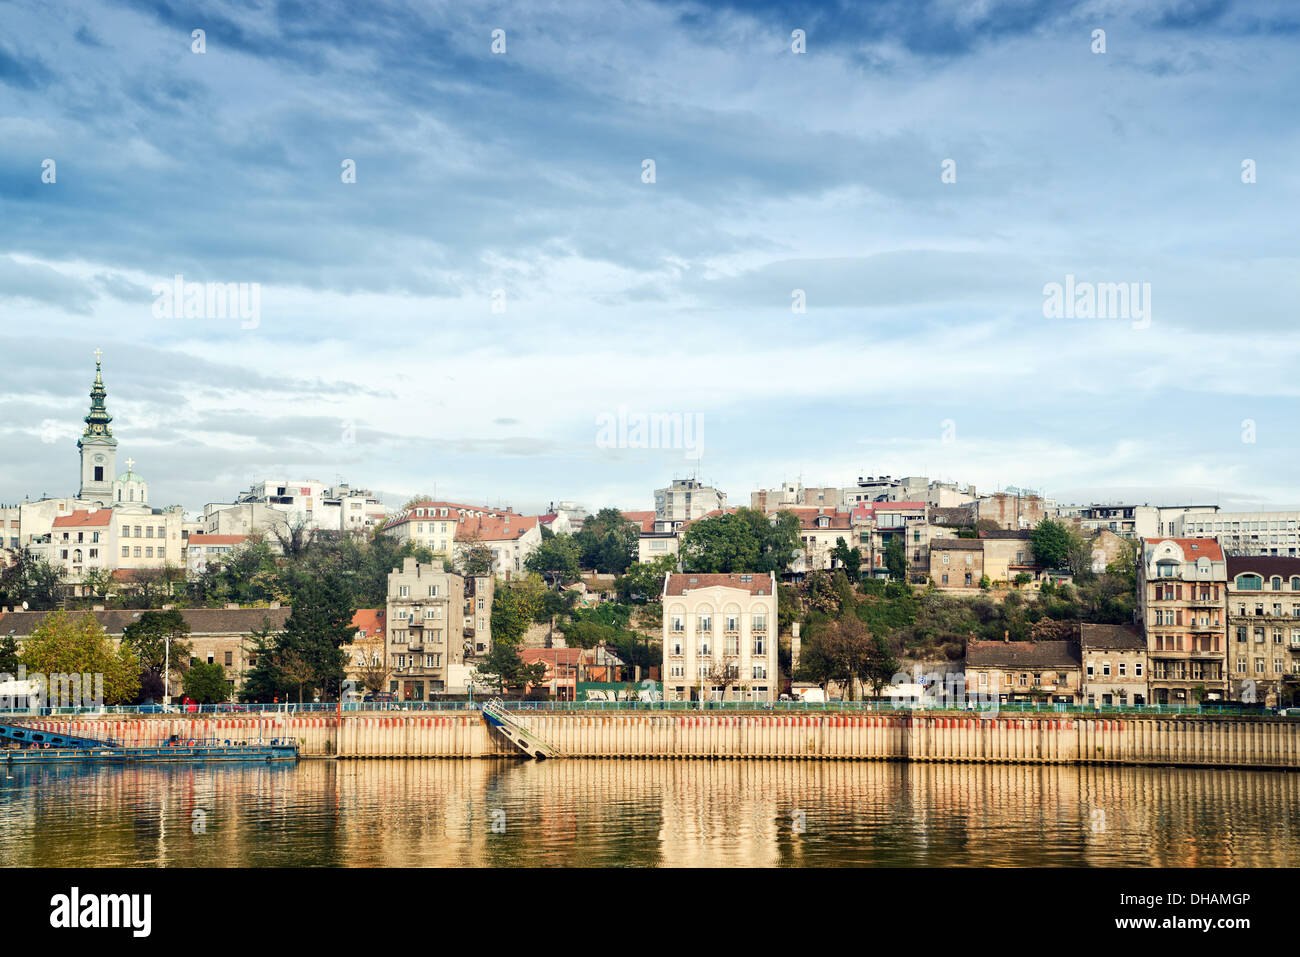 Stadt Belgrad, Hauptstadt von Serbien, über den Fluss Sava Stockfoto